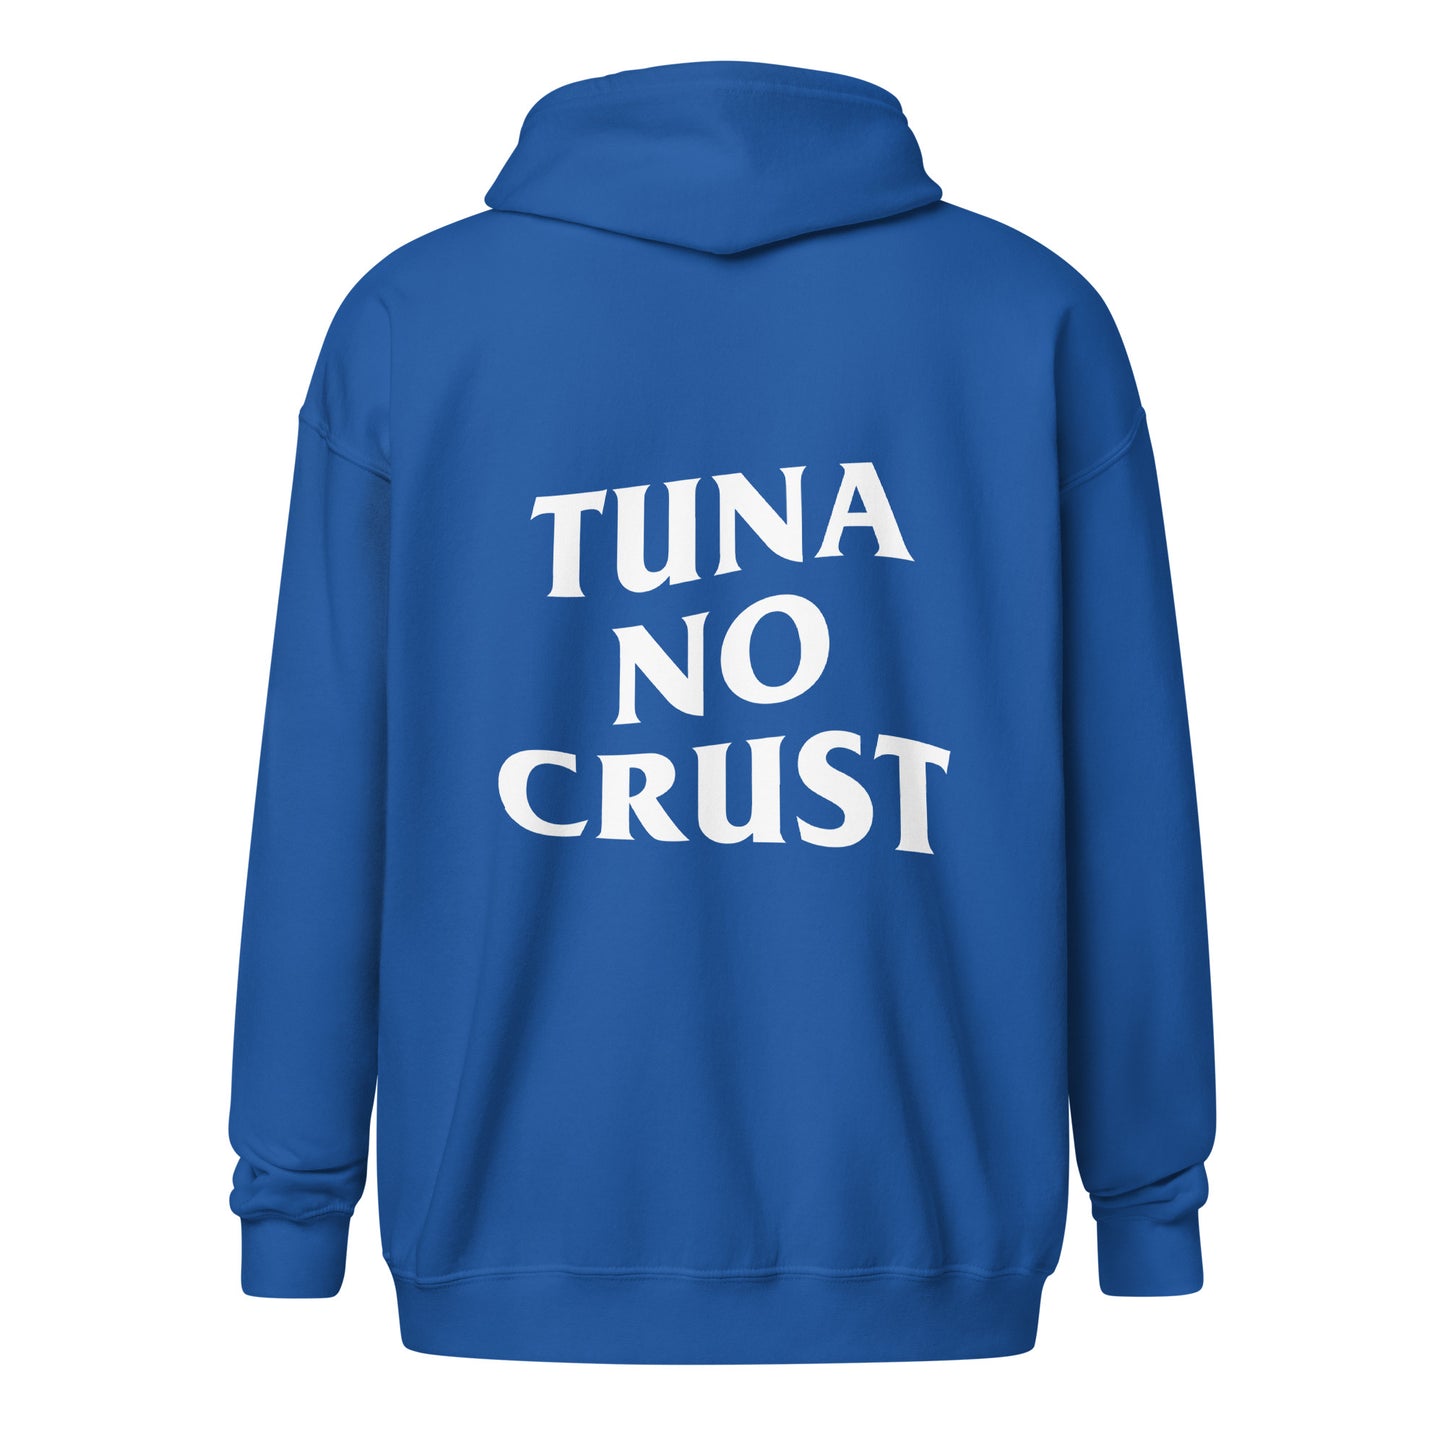 Tuna No Crust Zip Hoodie